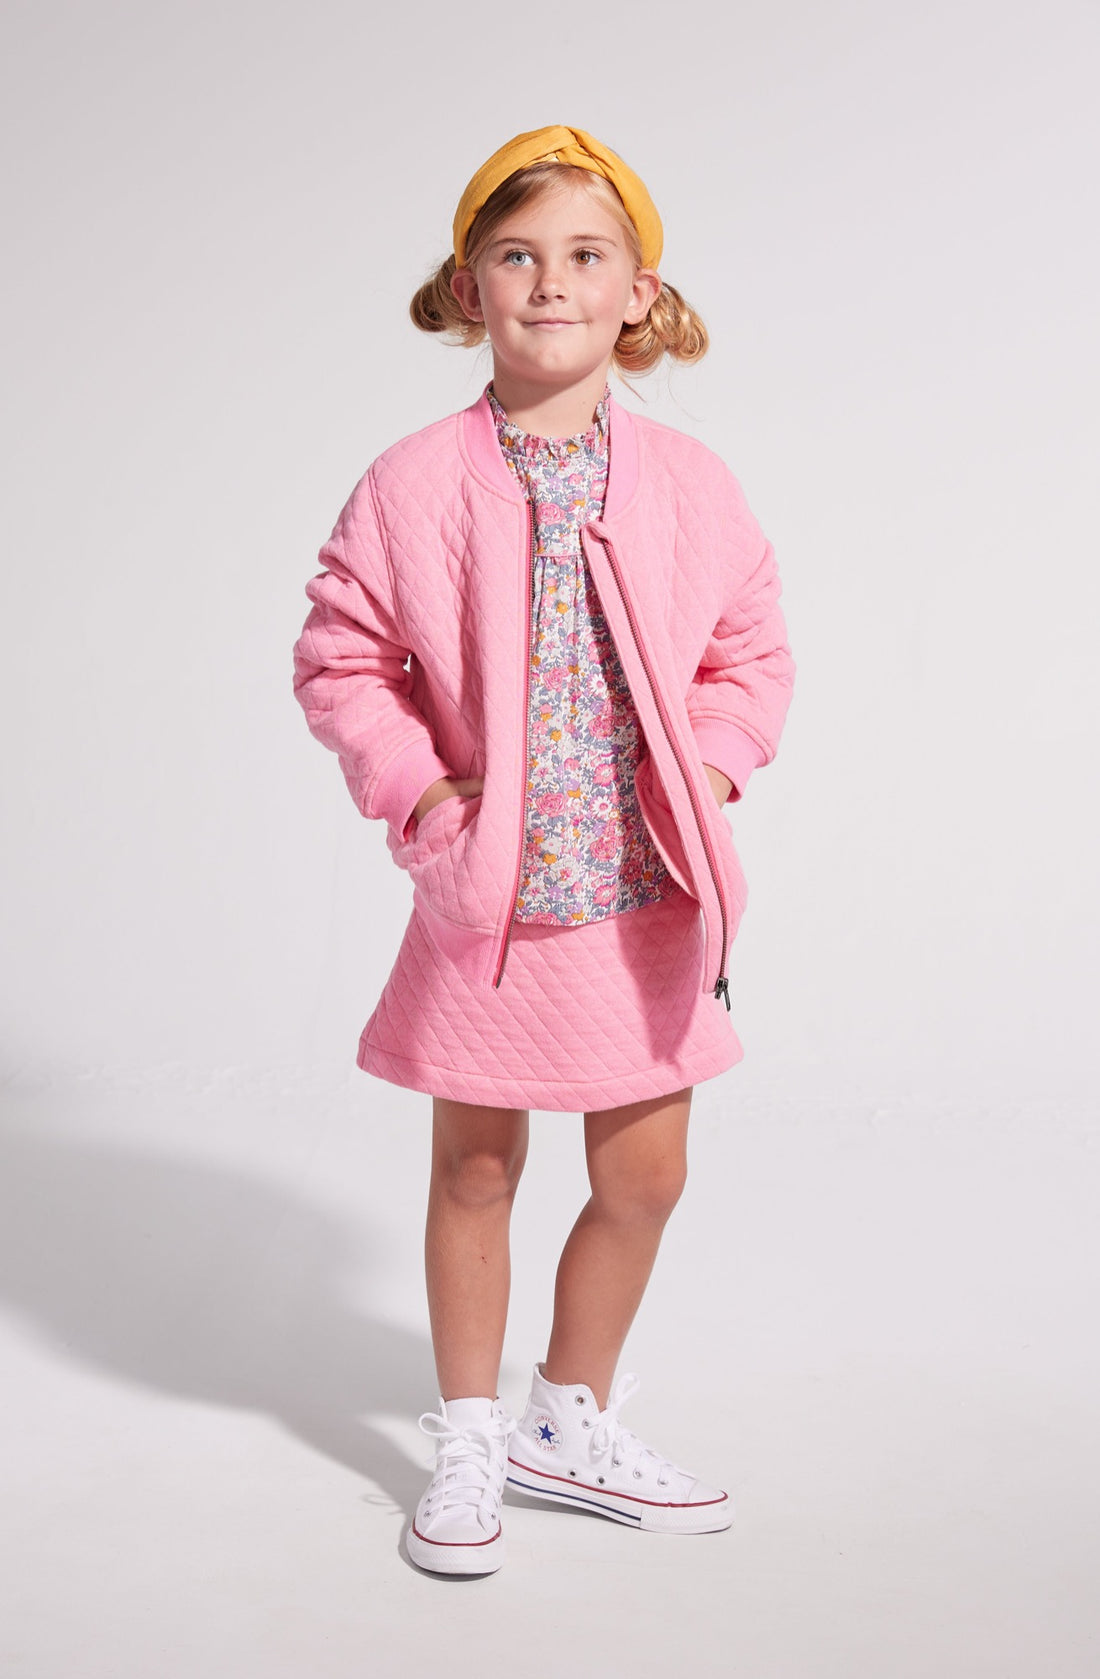 pink cotton zip up jacket with pockets for tweens